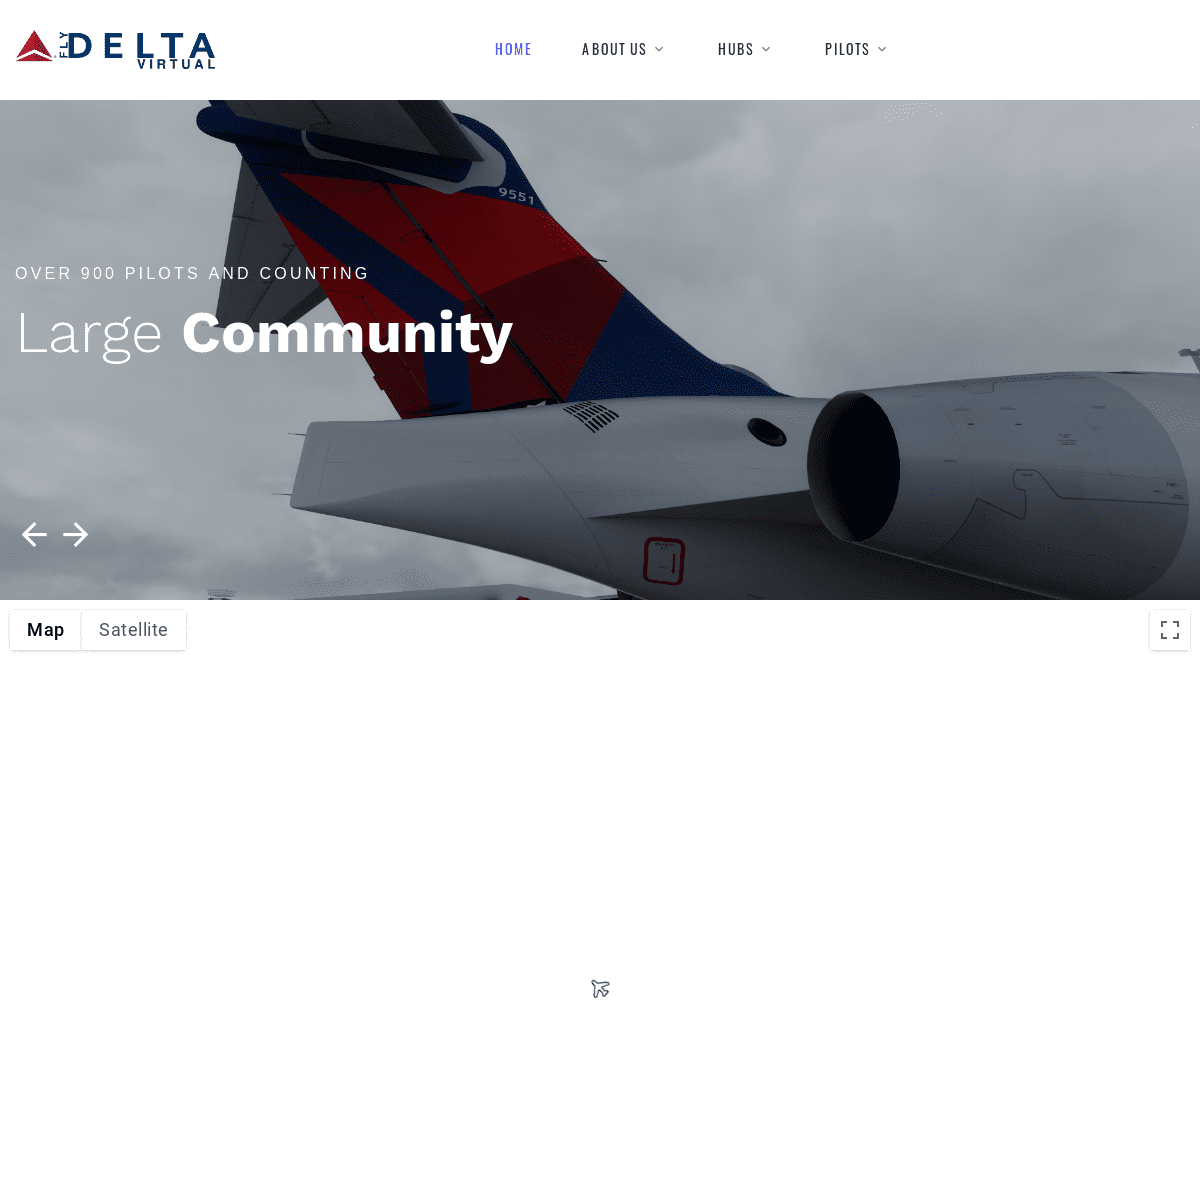 A complete backup of flydeltavirtual.org